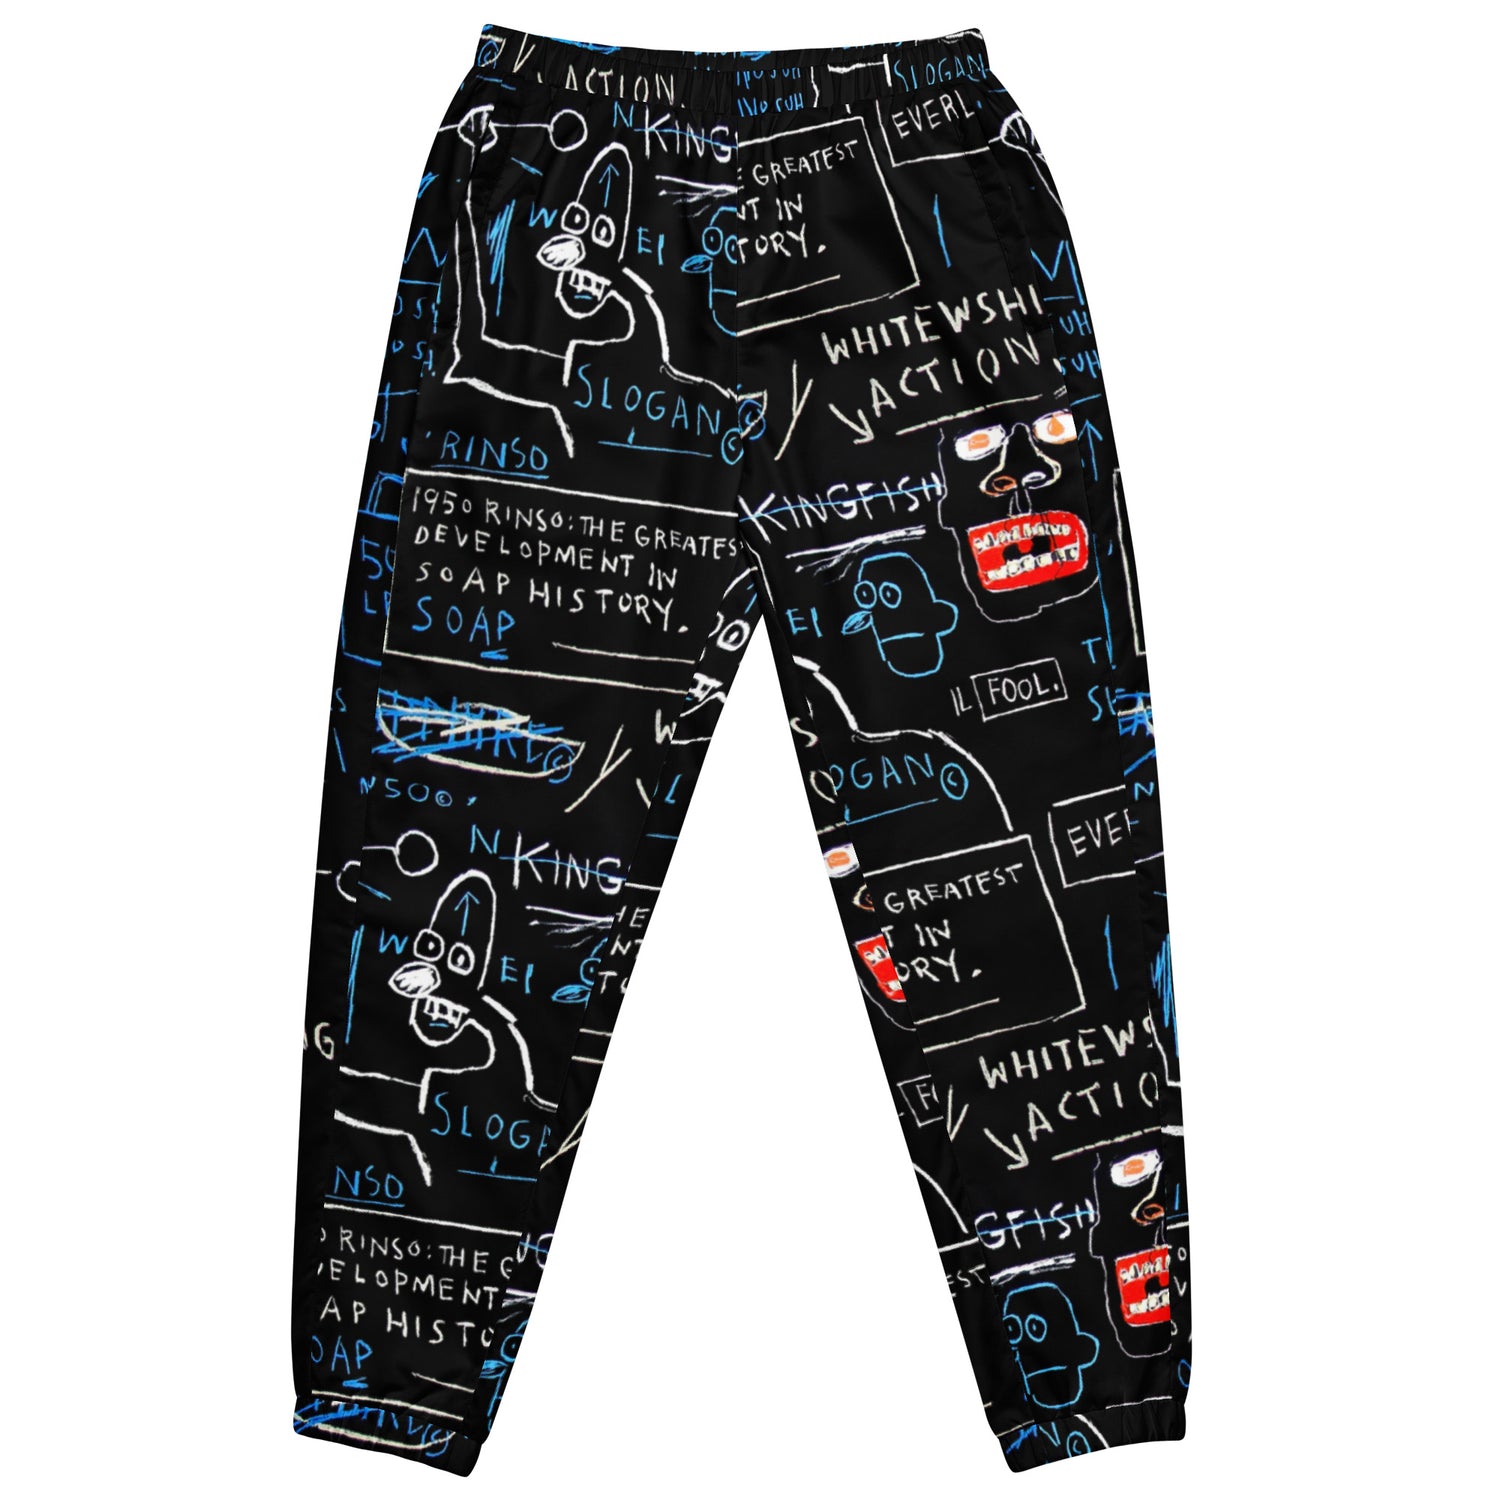 Jean-Michel Basquiat "Rinso" Artwork Printed Premium Streetwear Track Pants